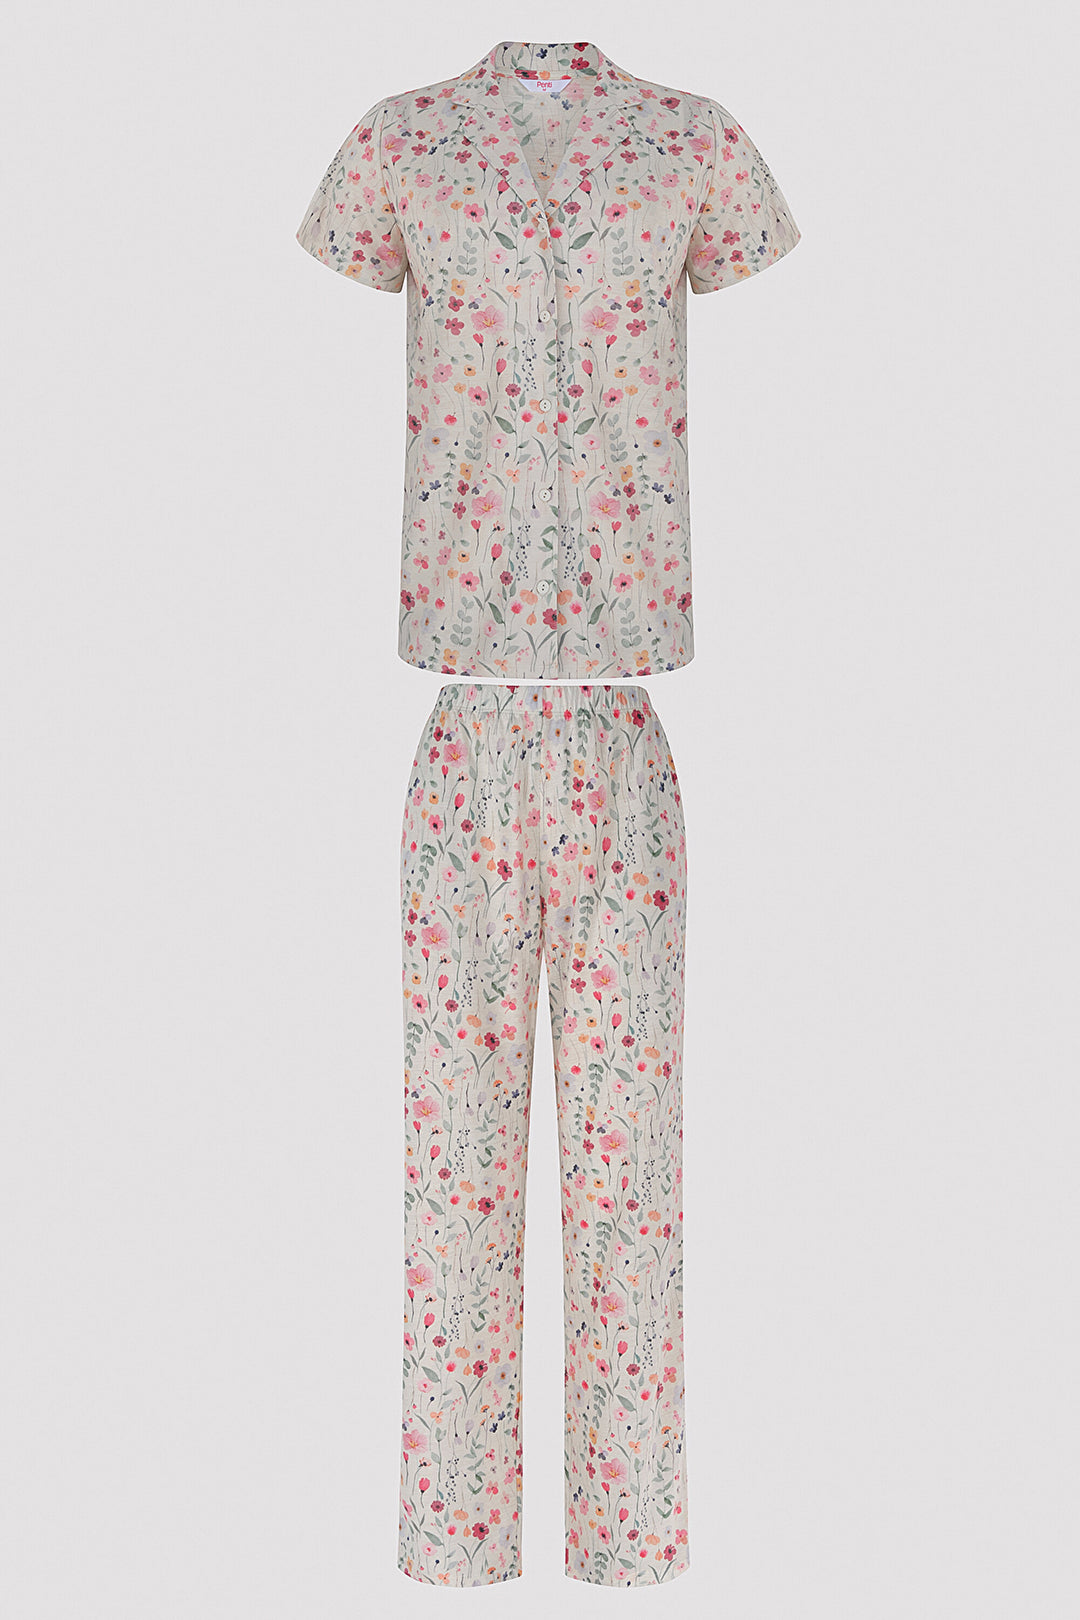 Spring Flowers Shirt Pant PJ Set